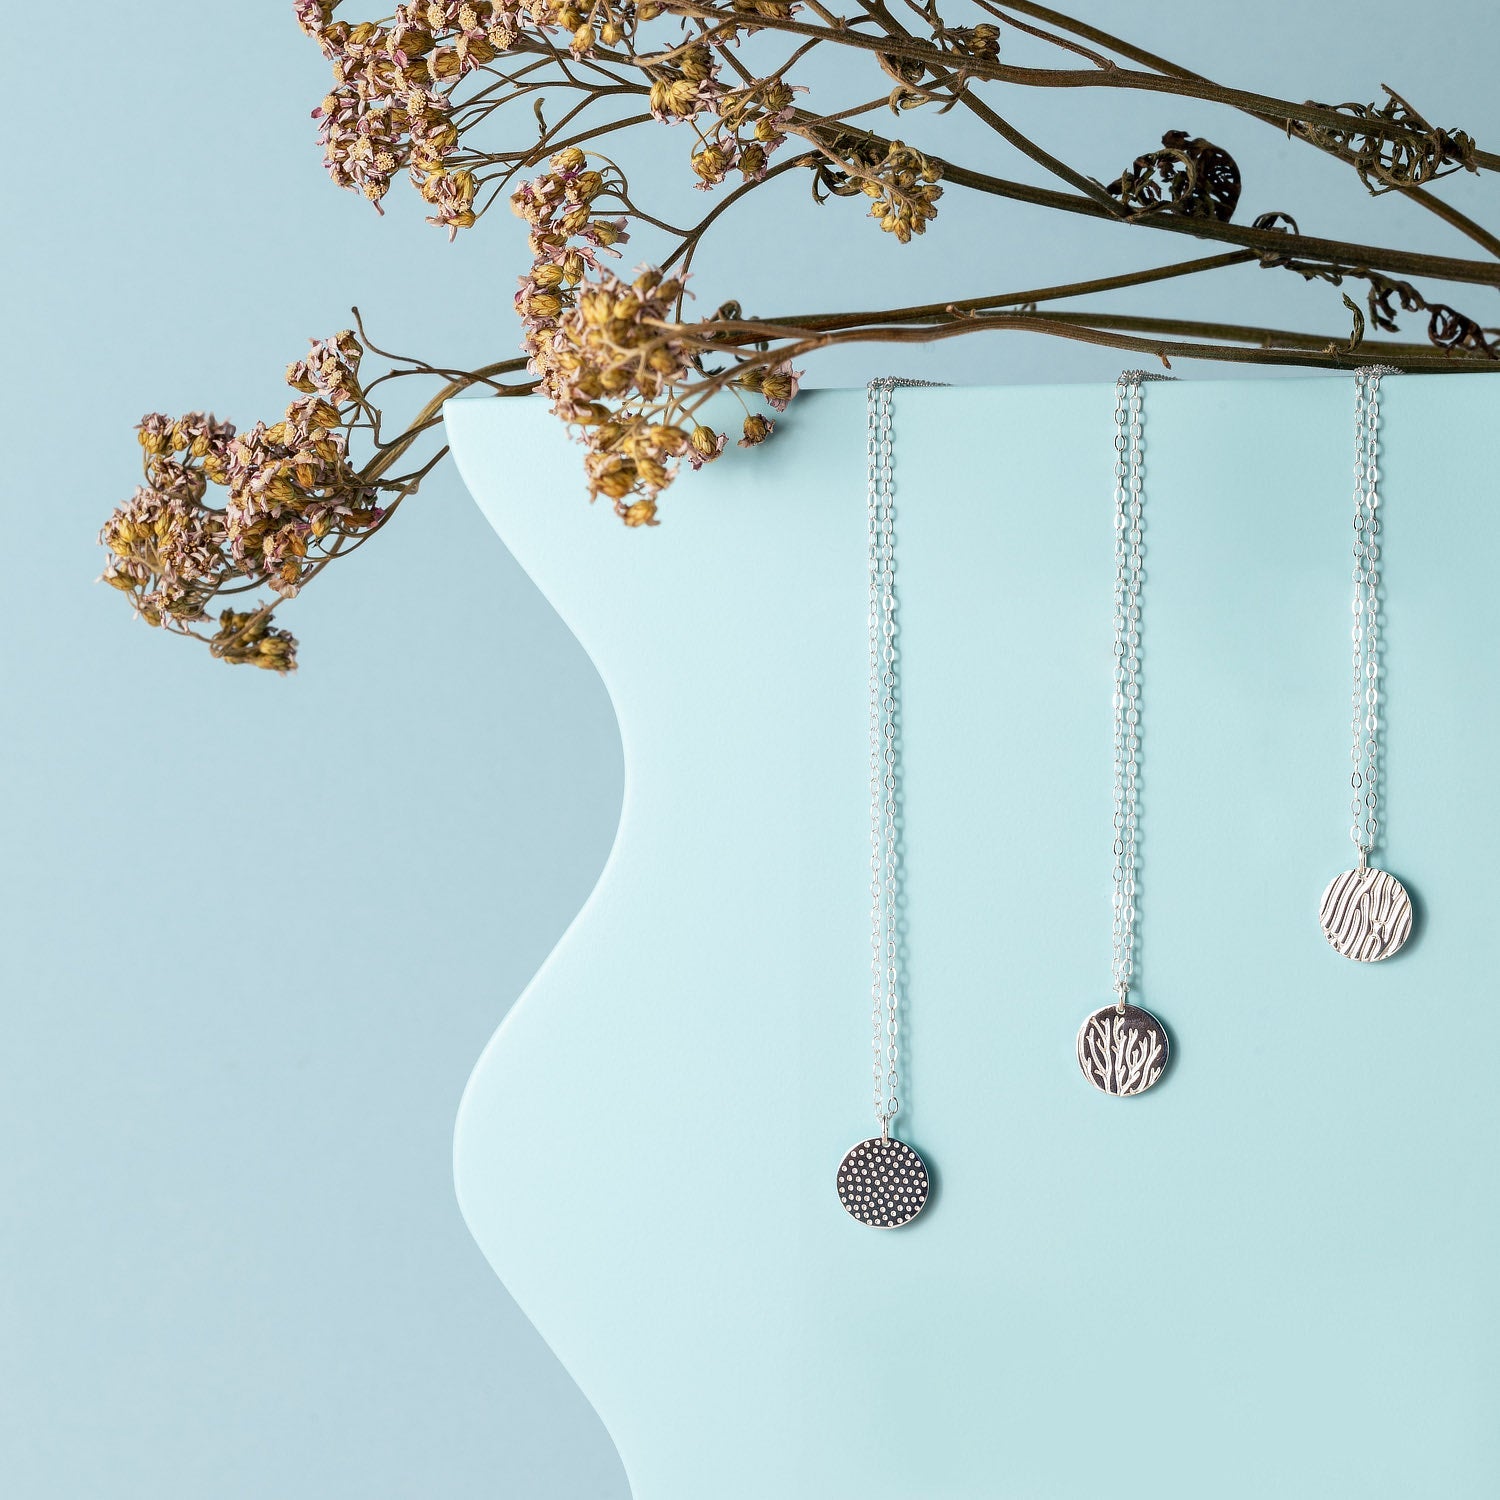 Dots texture silver pendant necklace - Simone Walsh Jewellery Australia